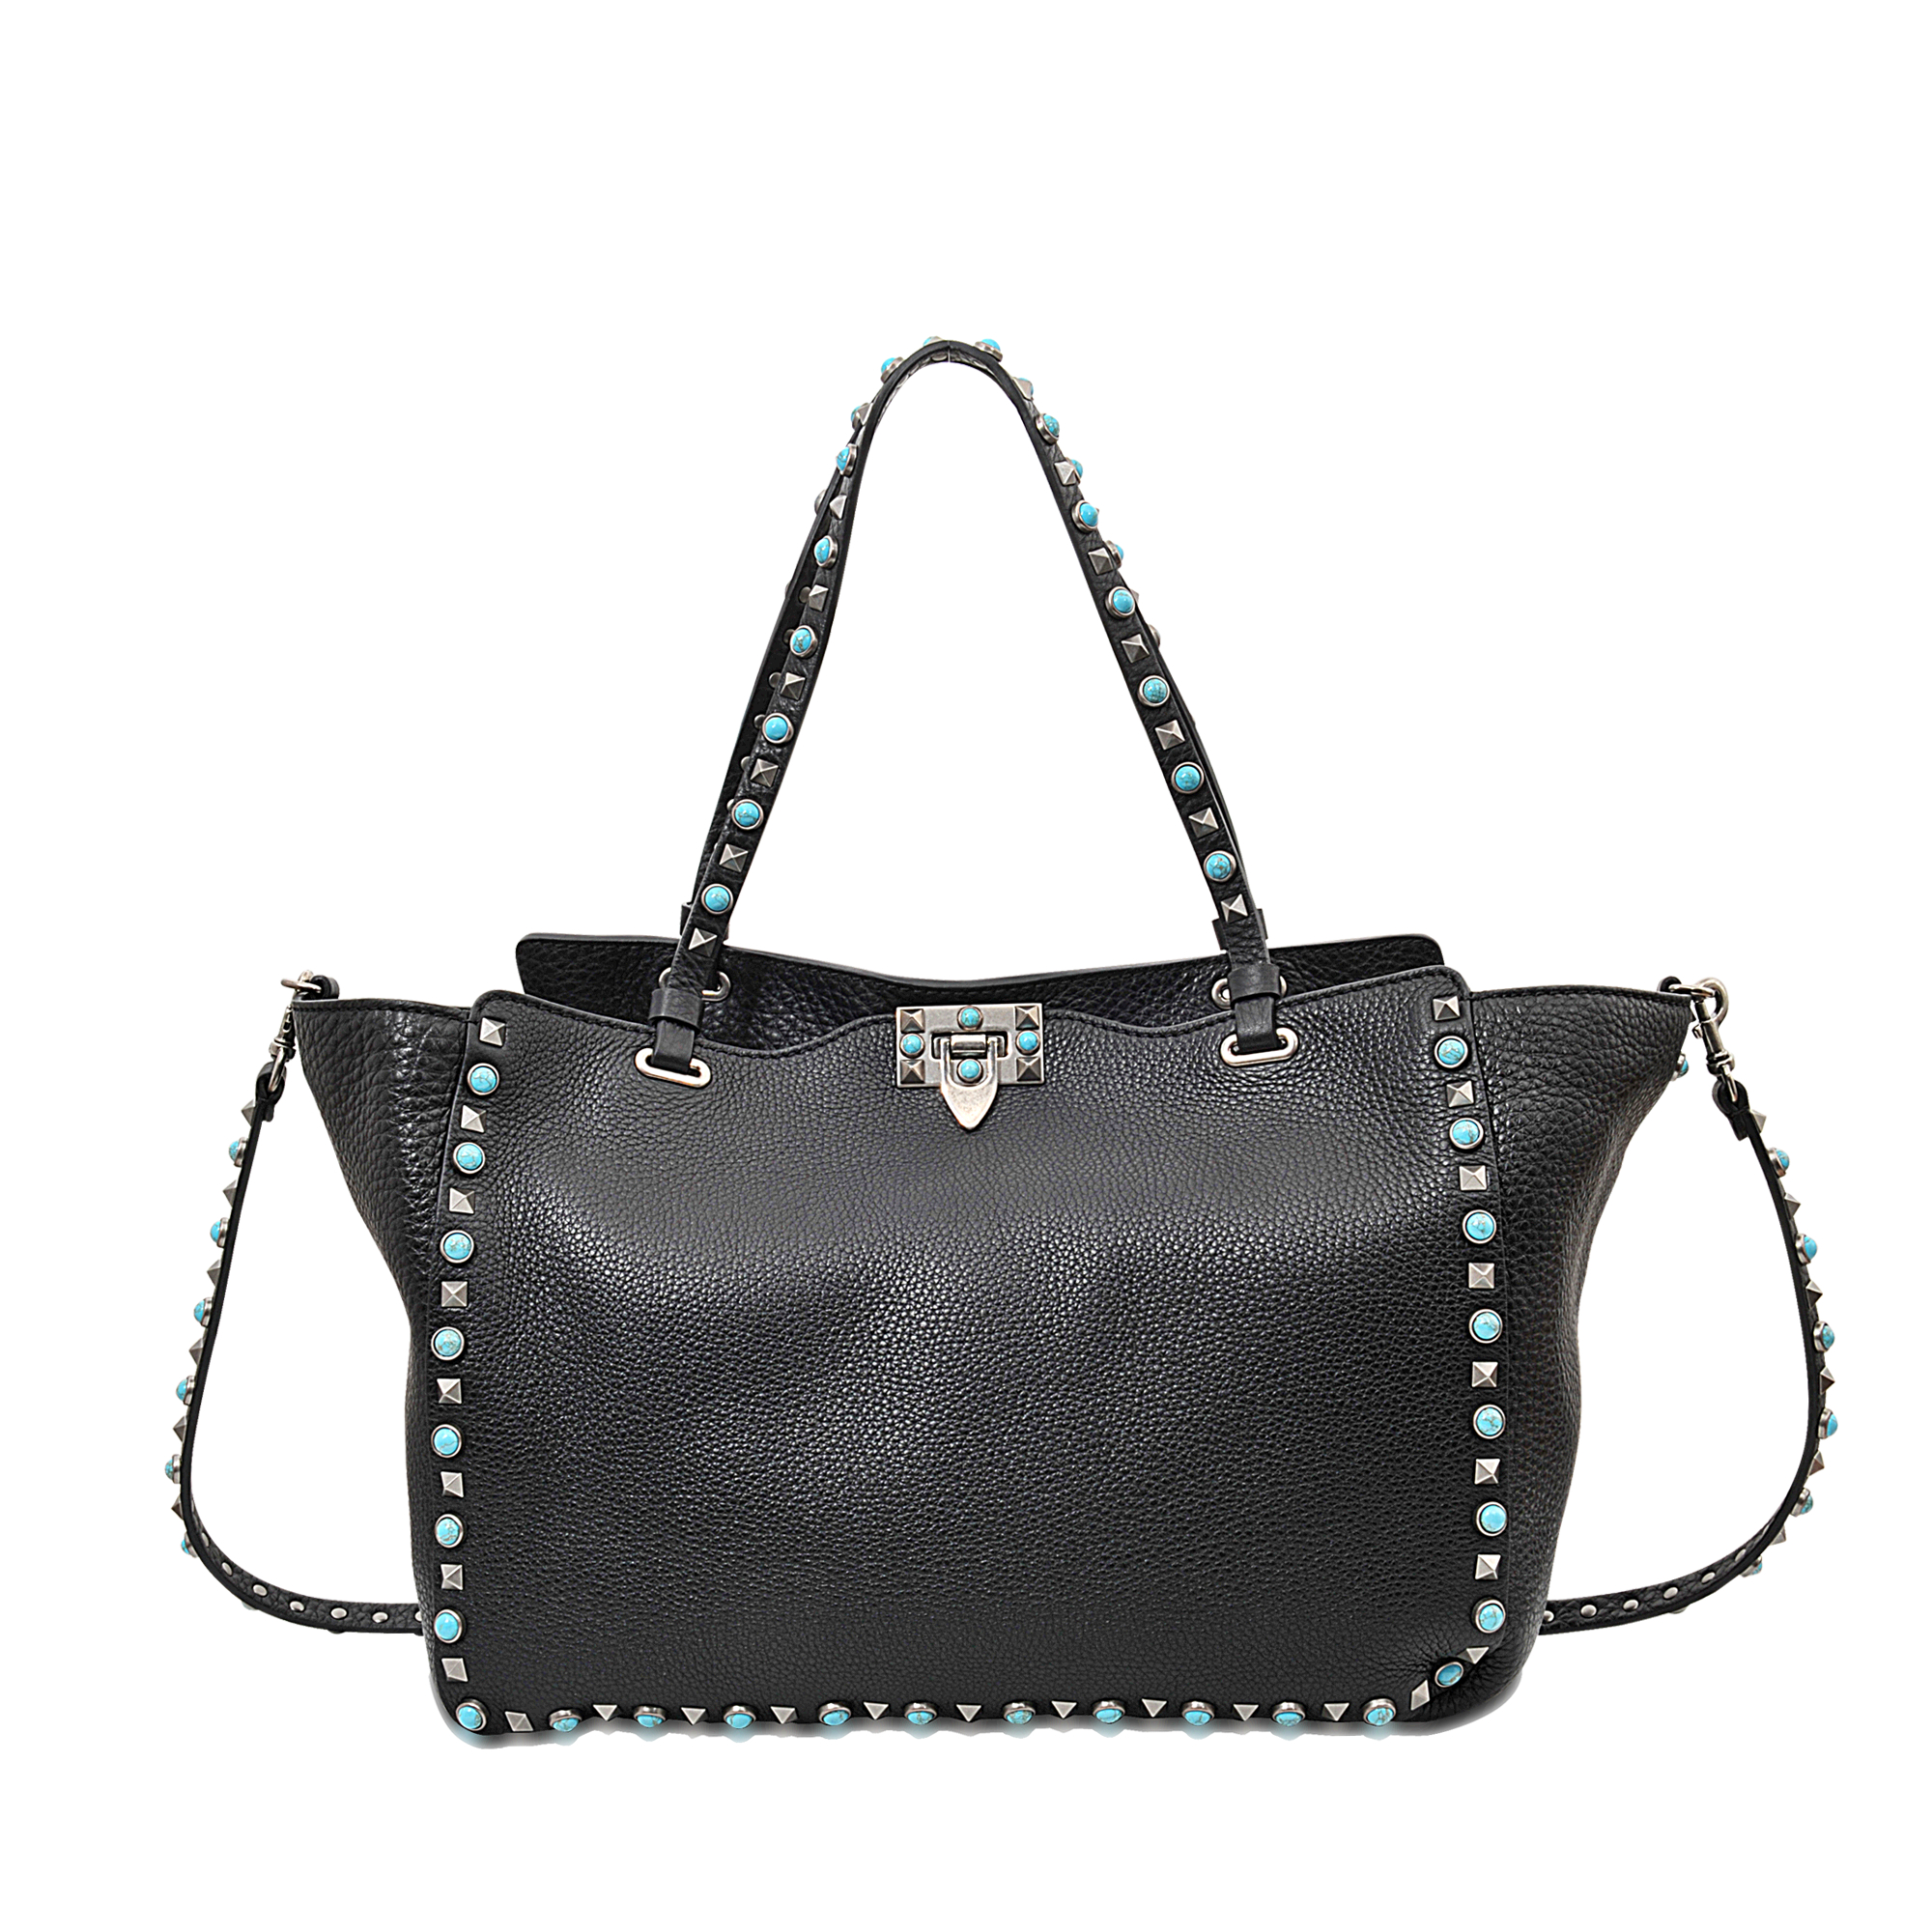 Valentino Rolling Turquoise Rockstud Medium Bag in Black - Lyst